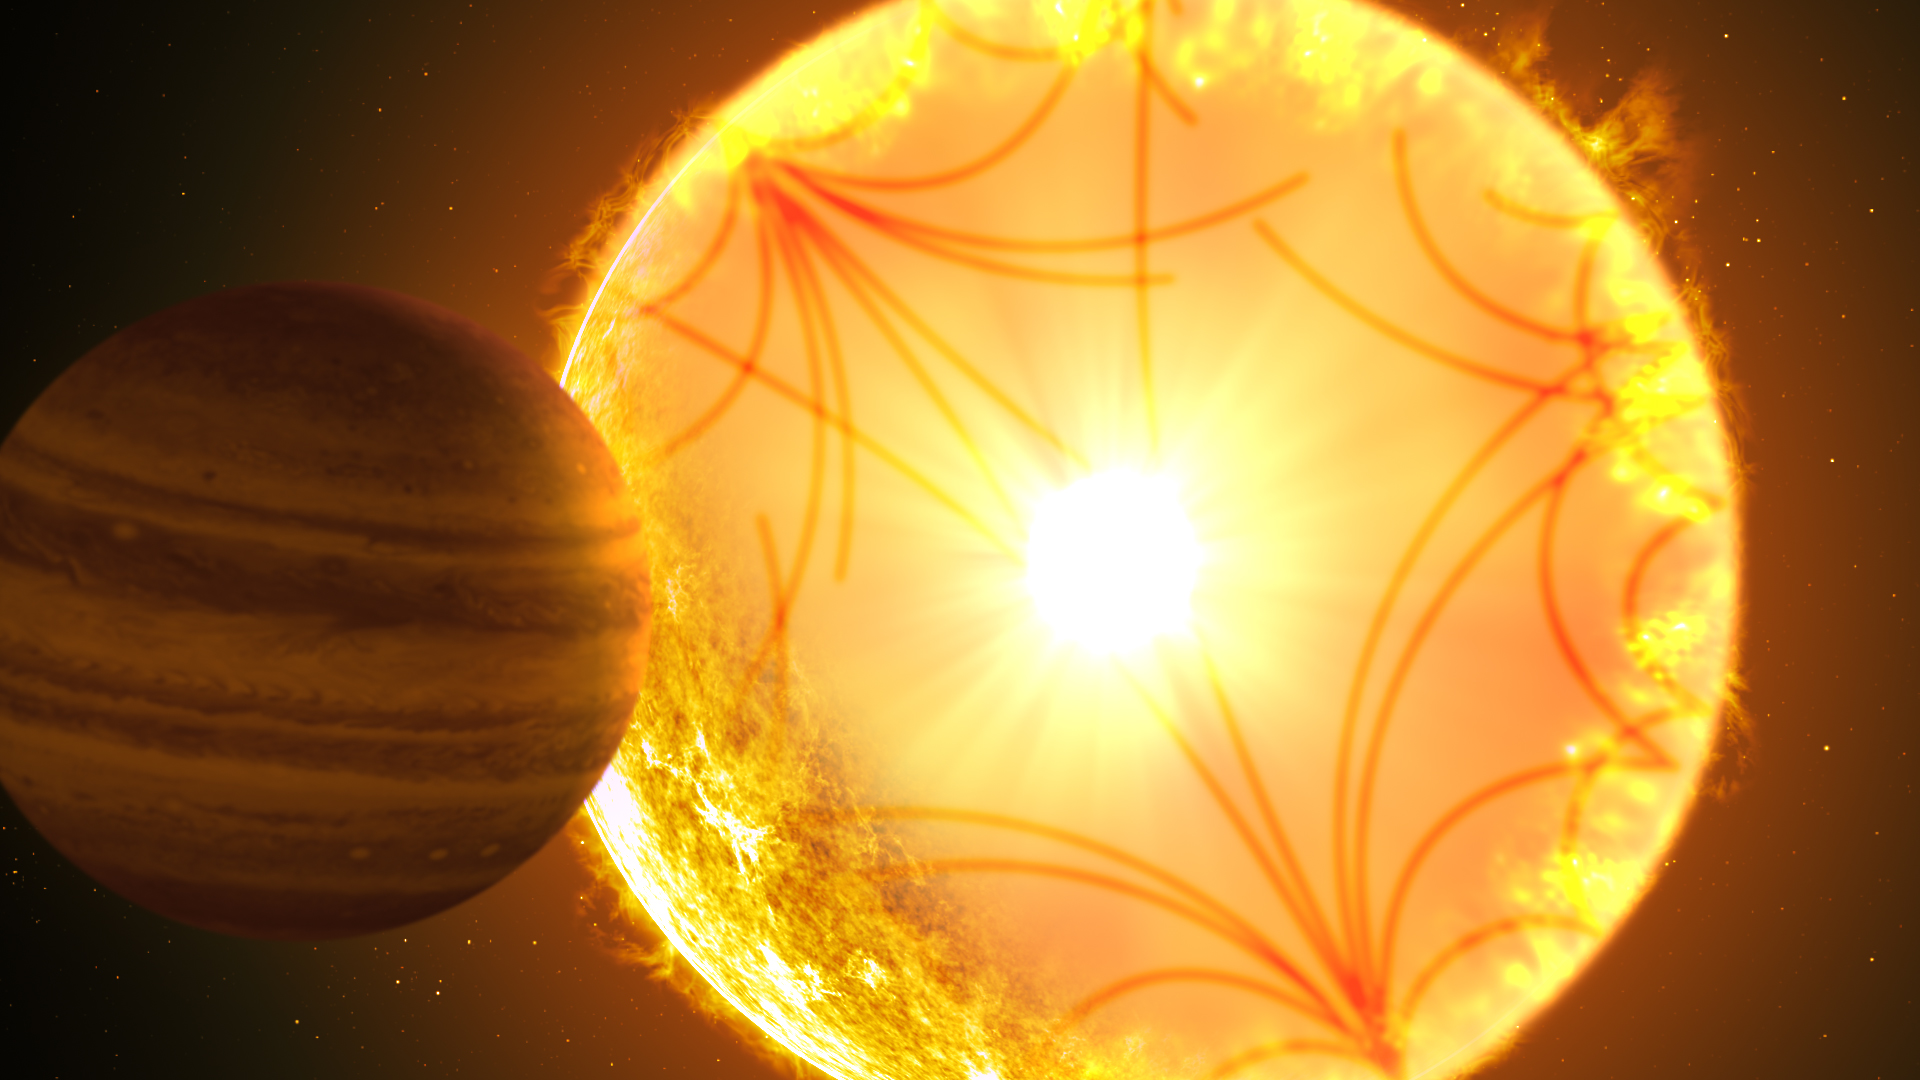 Doom-spiraling exoplanet will someday meet fiery demise